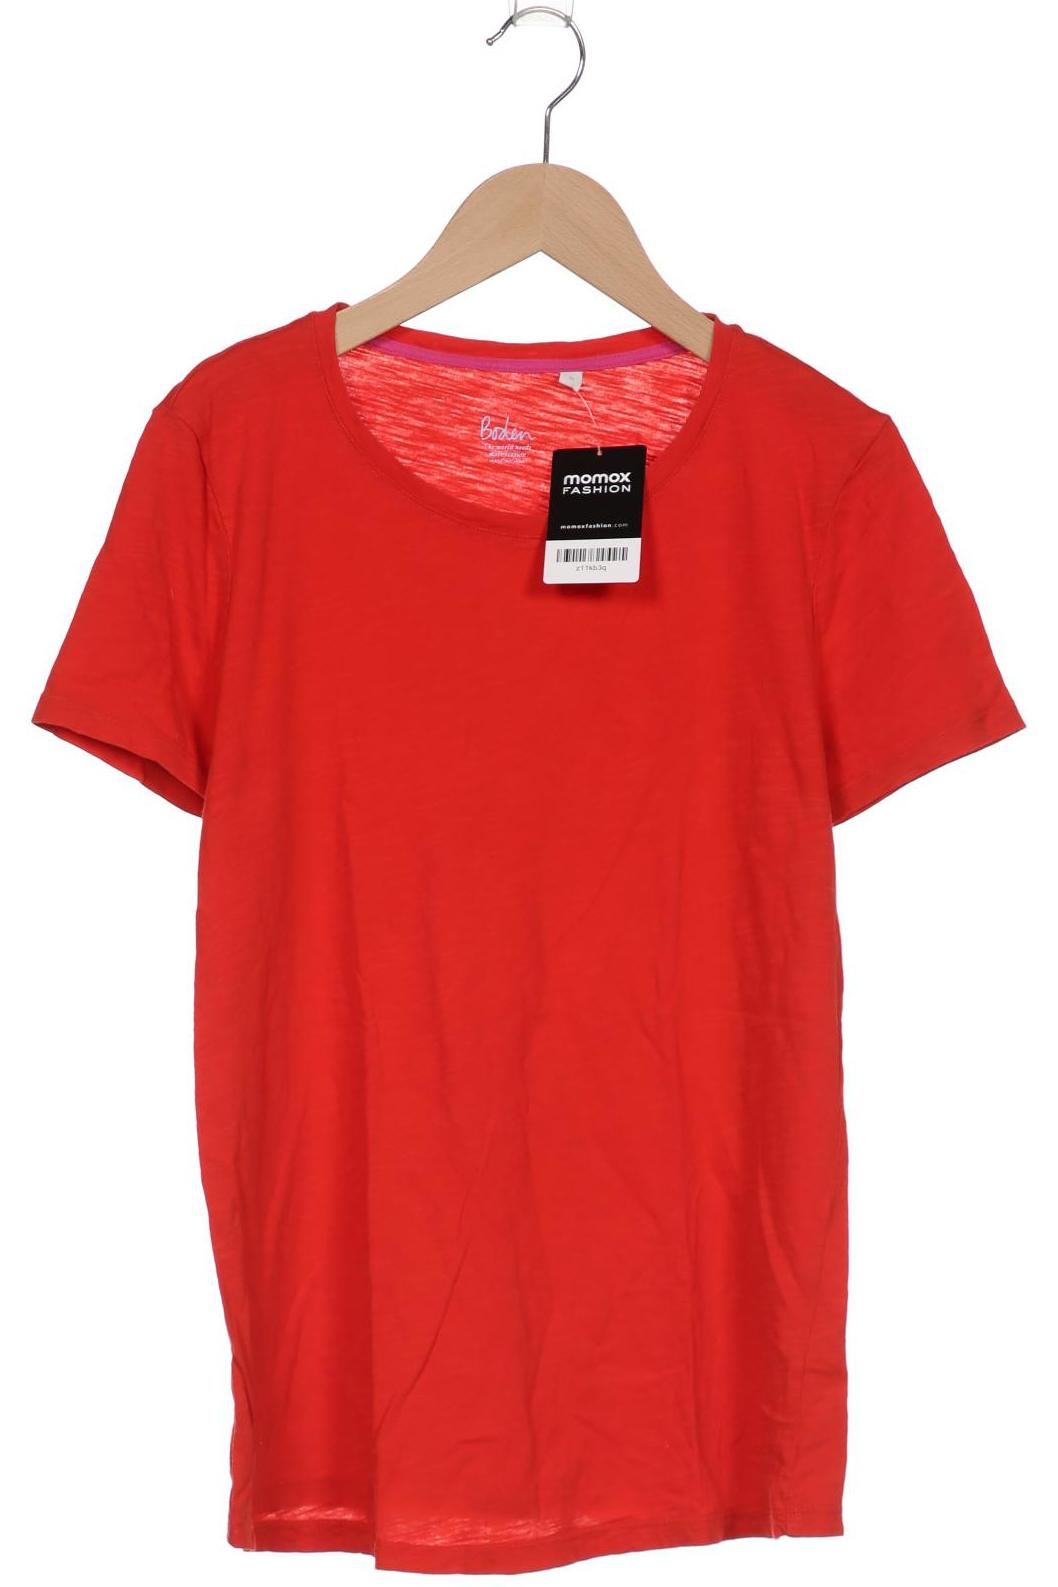 Boden Damen T-Shirt, rot, Gr. 38 von Boden